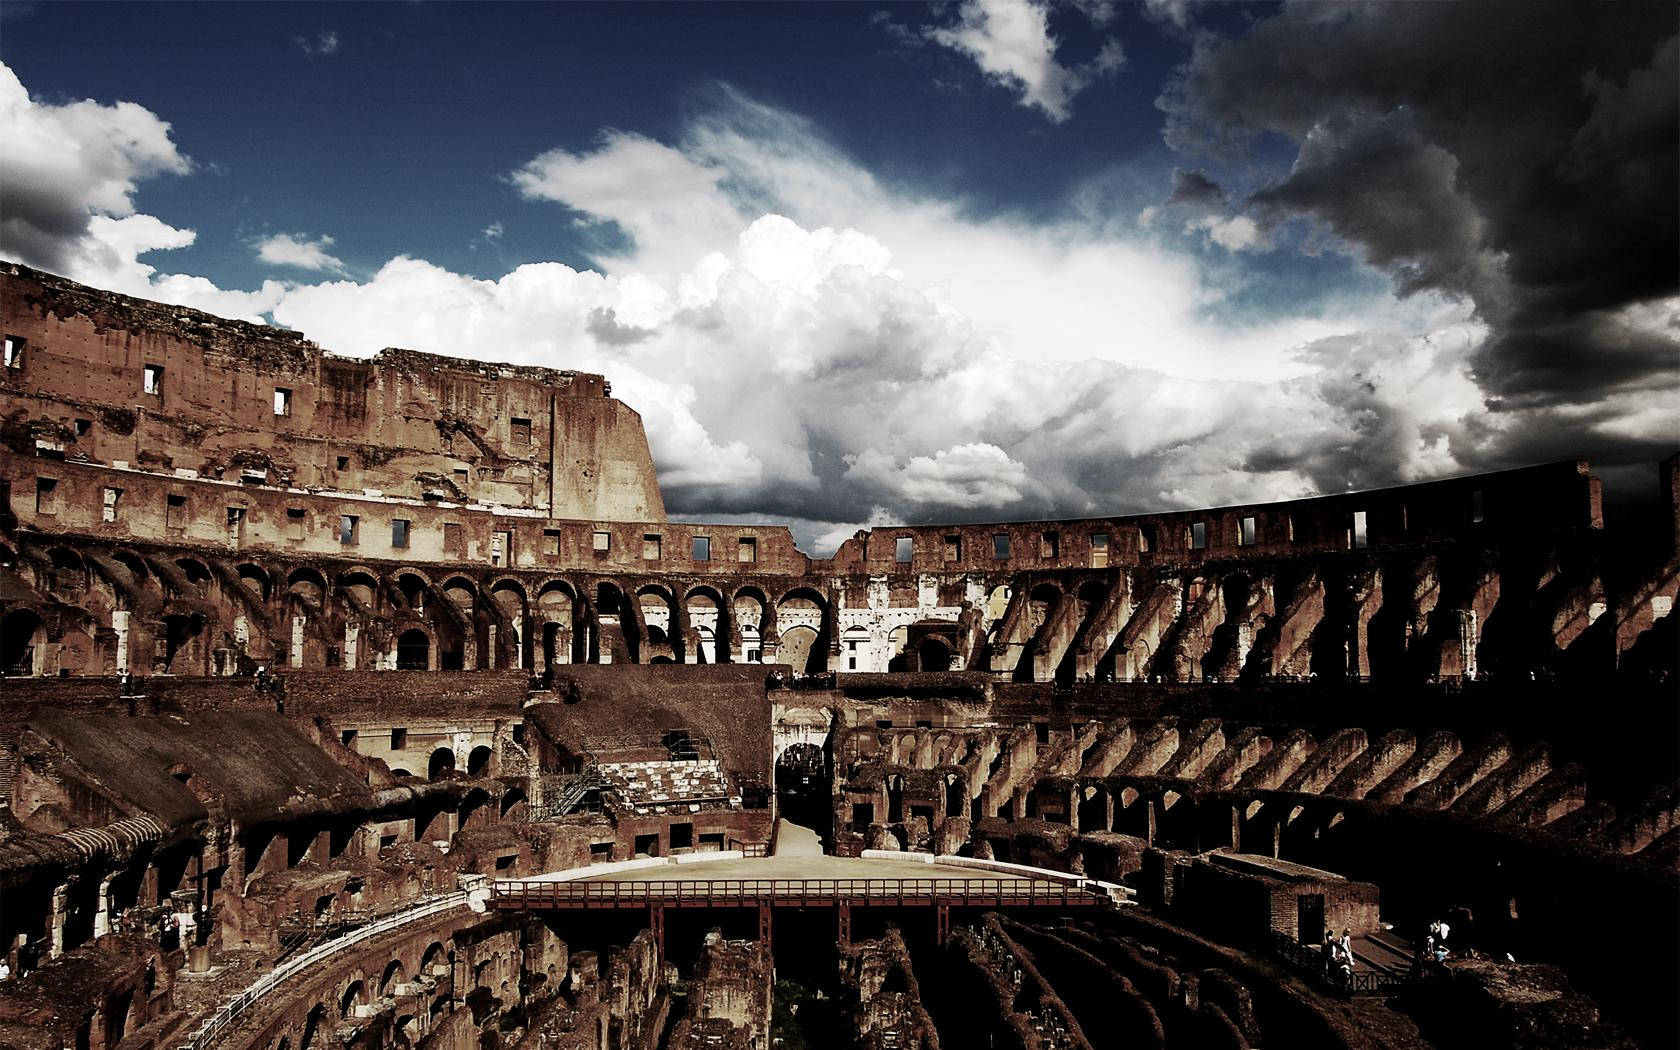 Dark Aesthetic Roman Colosseum Interior Wallpaper